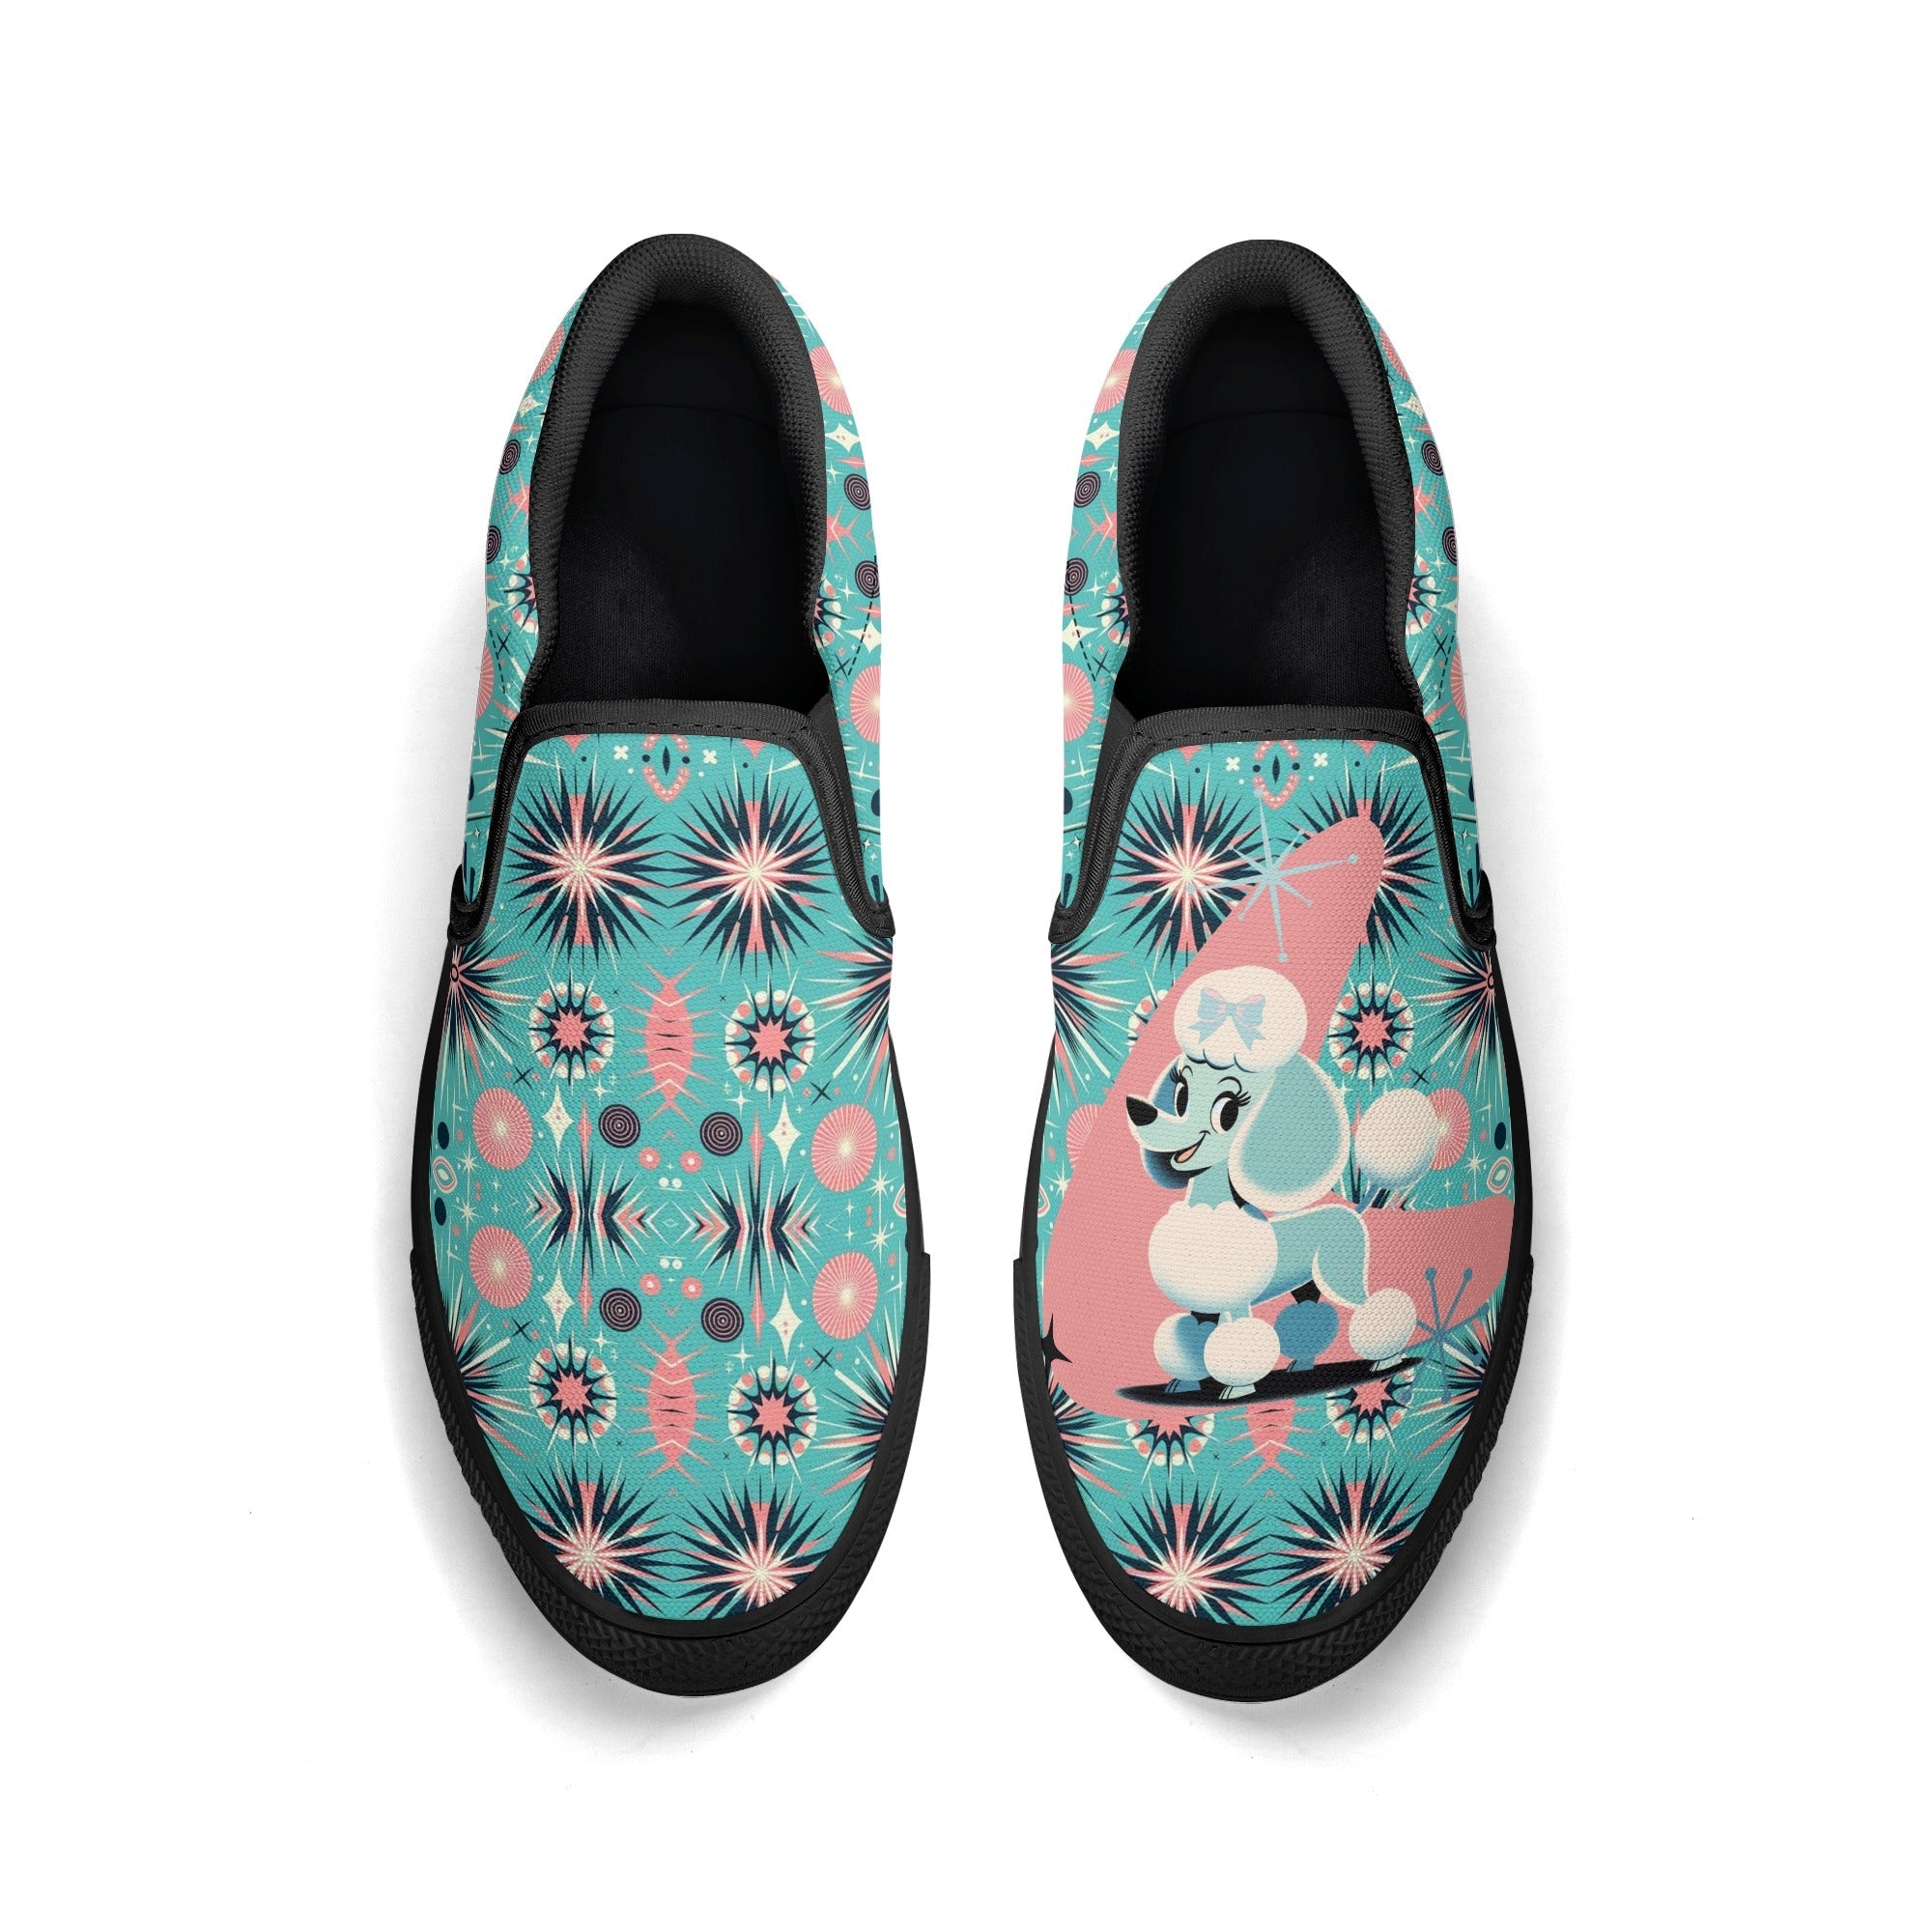 Atomic 50s Poodle Slip On Canvas Shoes, Mid Century Modern Pink, Aqua Starbursts